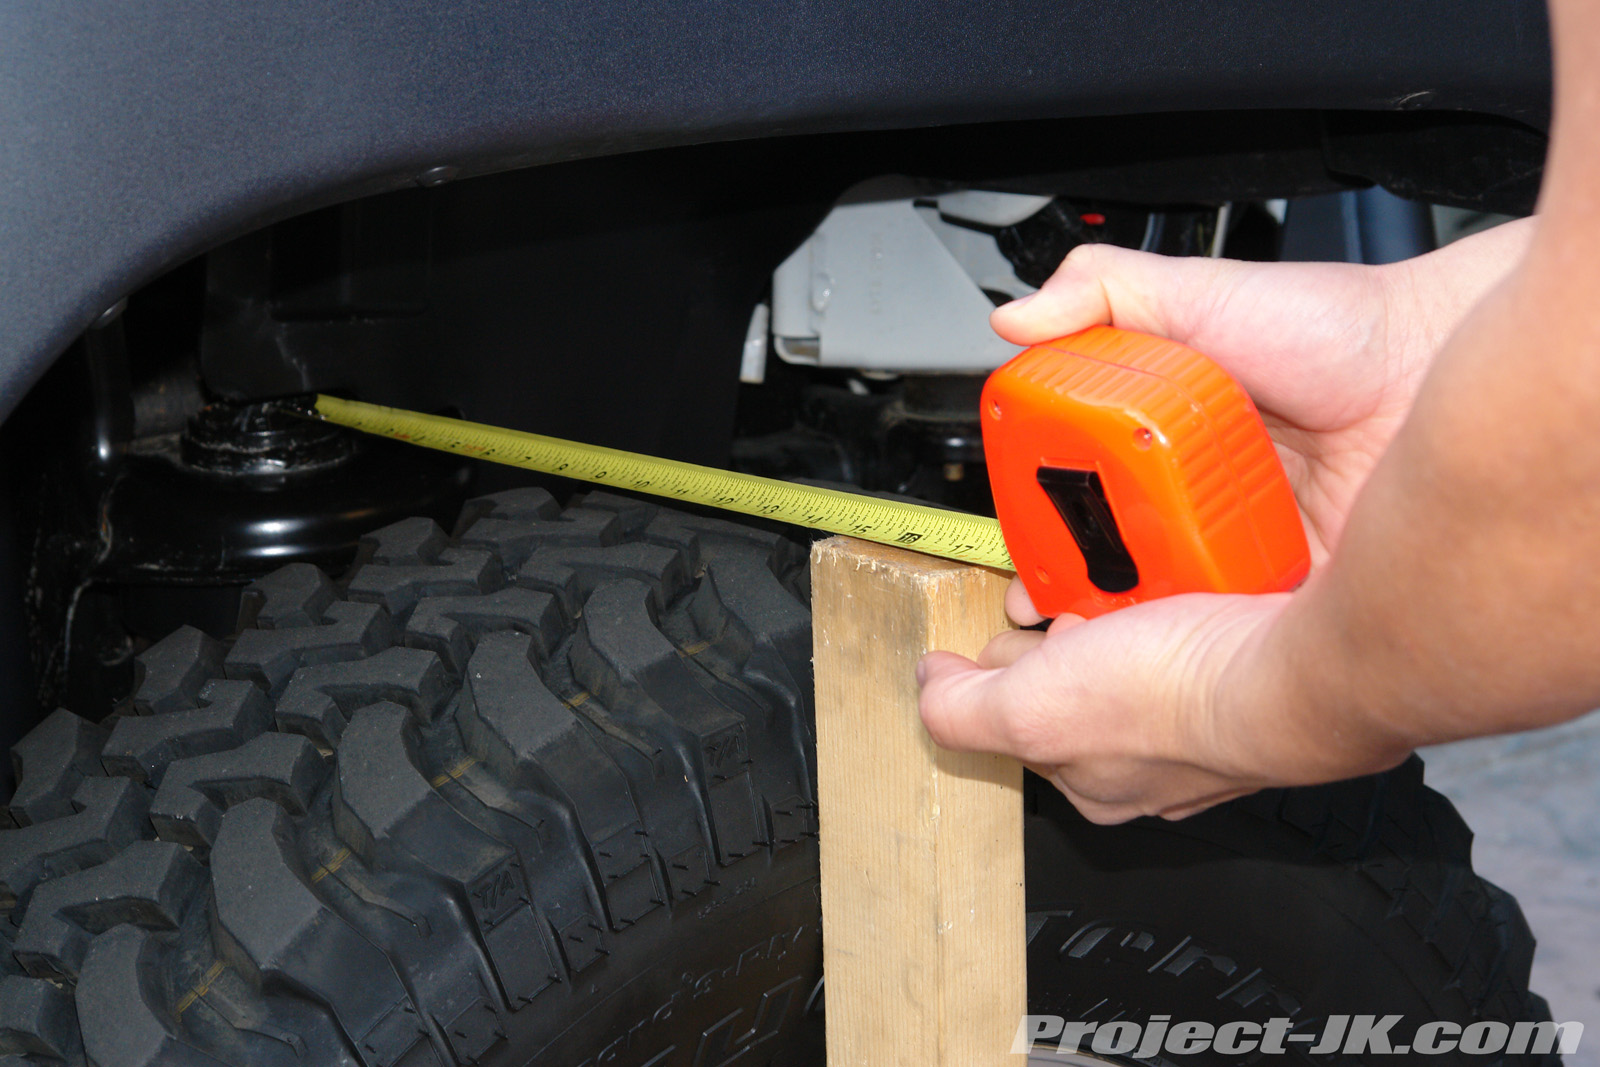 Full Traction Suspension Jeep JK Wrangler Adjustable Front Track Bar  Installation Write-Up – 